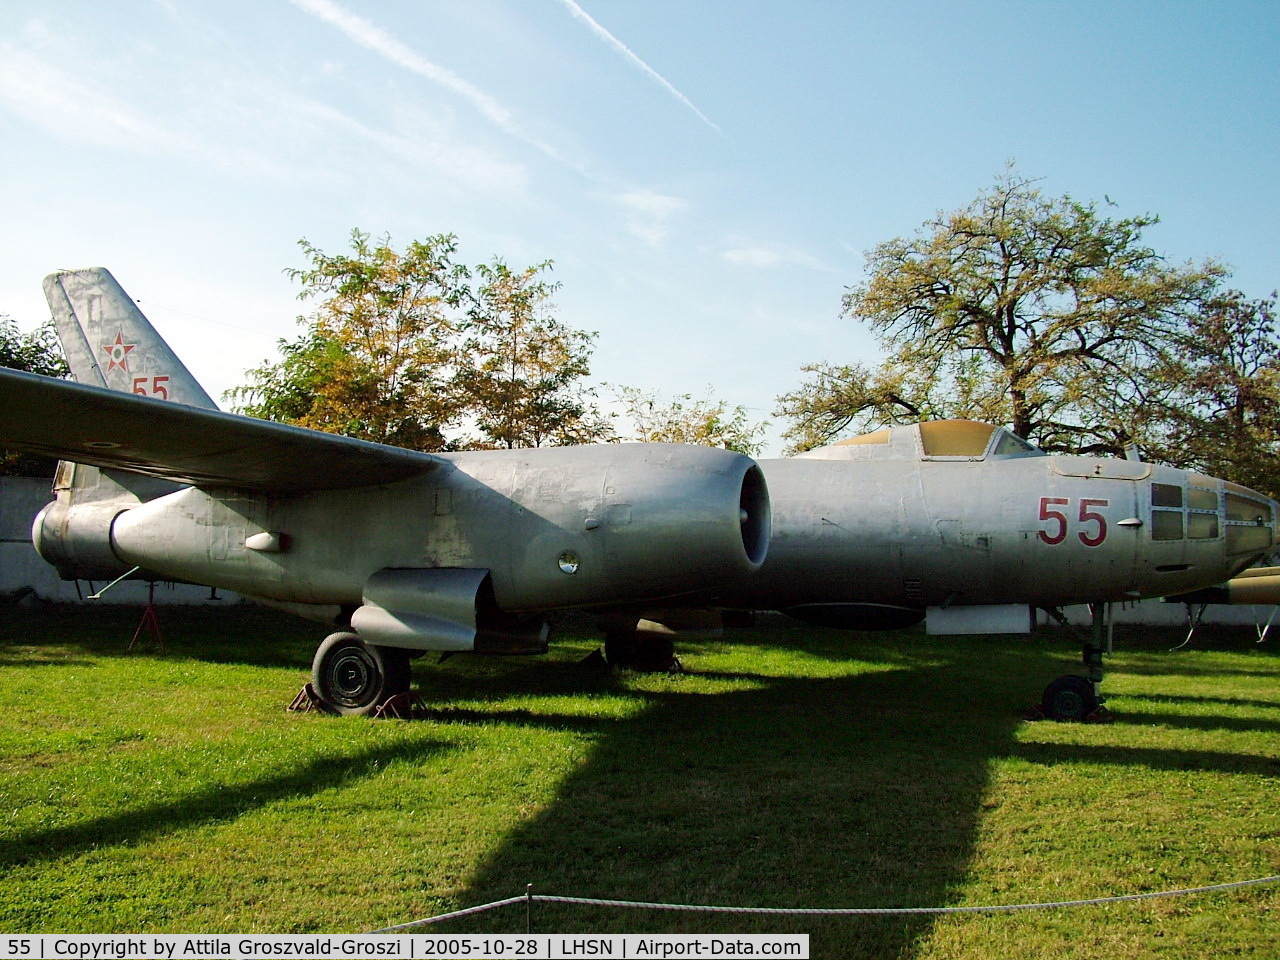 55, 1955 Ilyushin Il-28 C/N 55056455, Szolnok-Szandaszölös airplane museum.